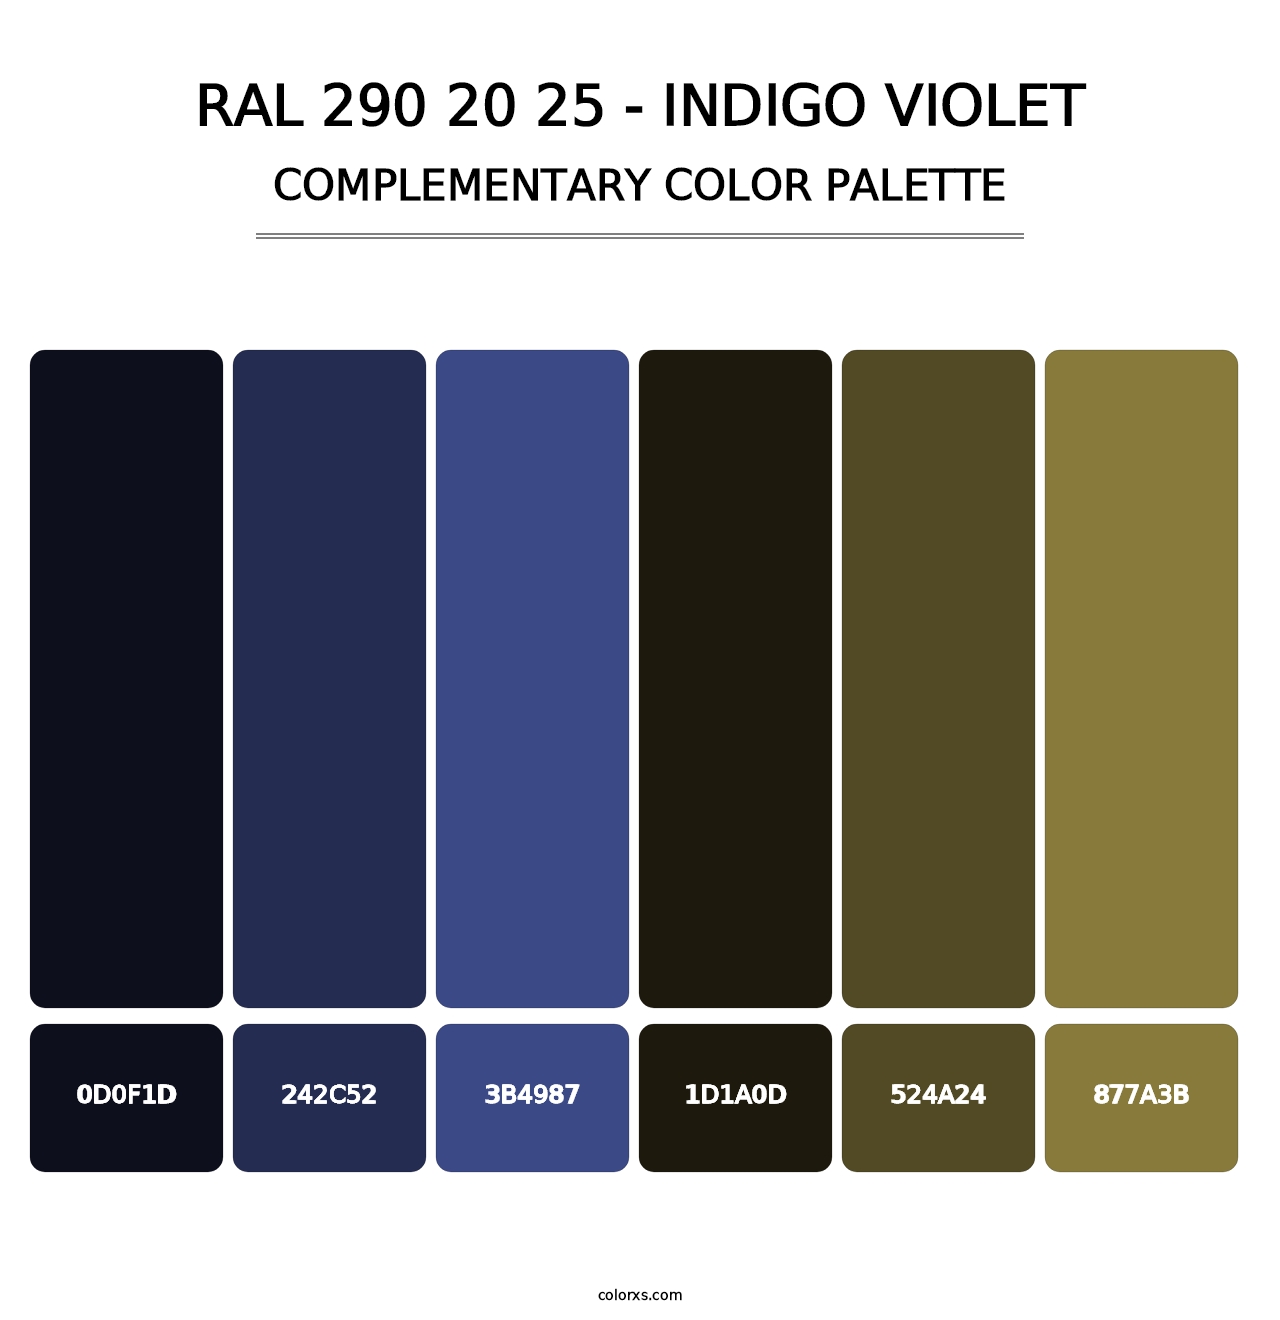 RAL 290 20 25 - Indigo Violet - Complementary Color Palette